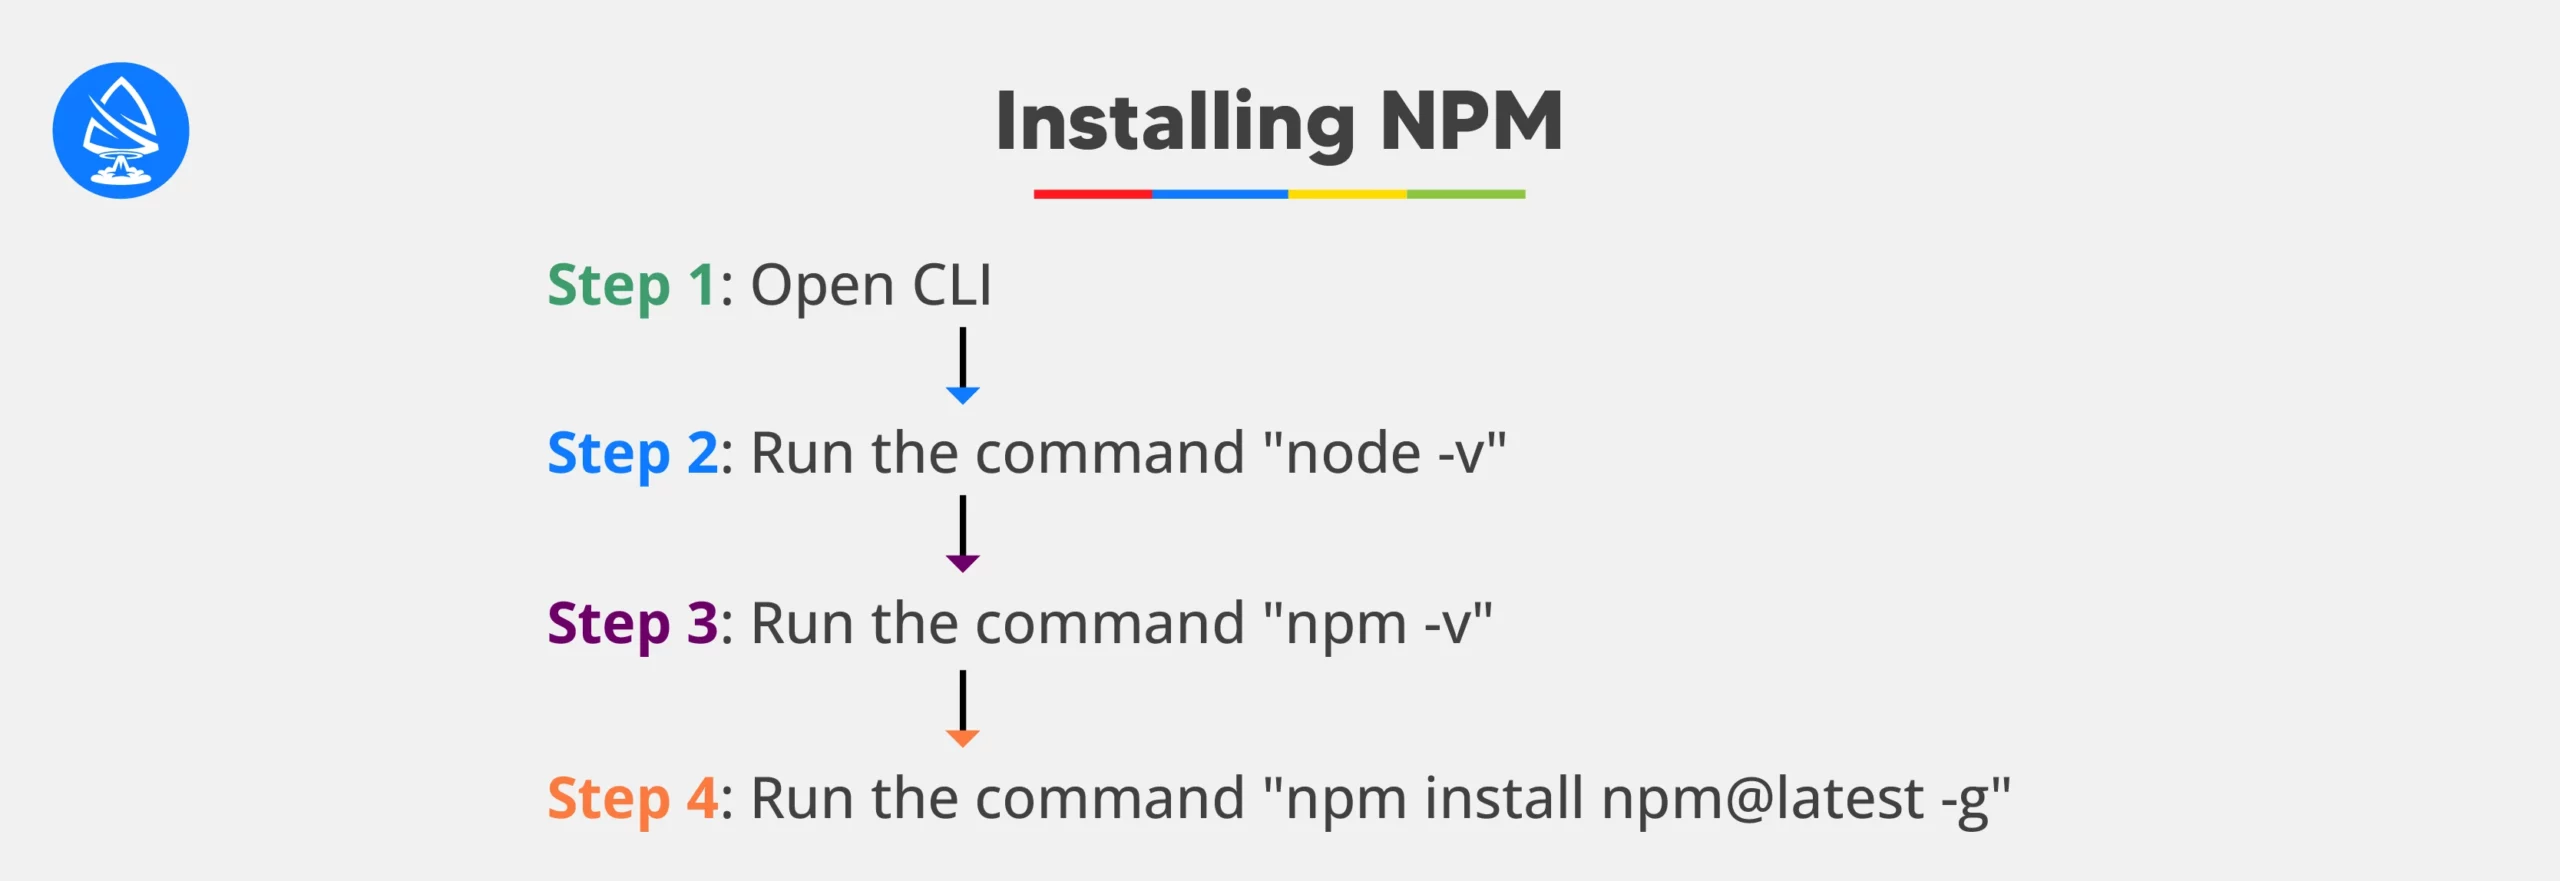 Installing NPM 